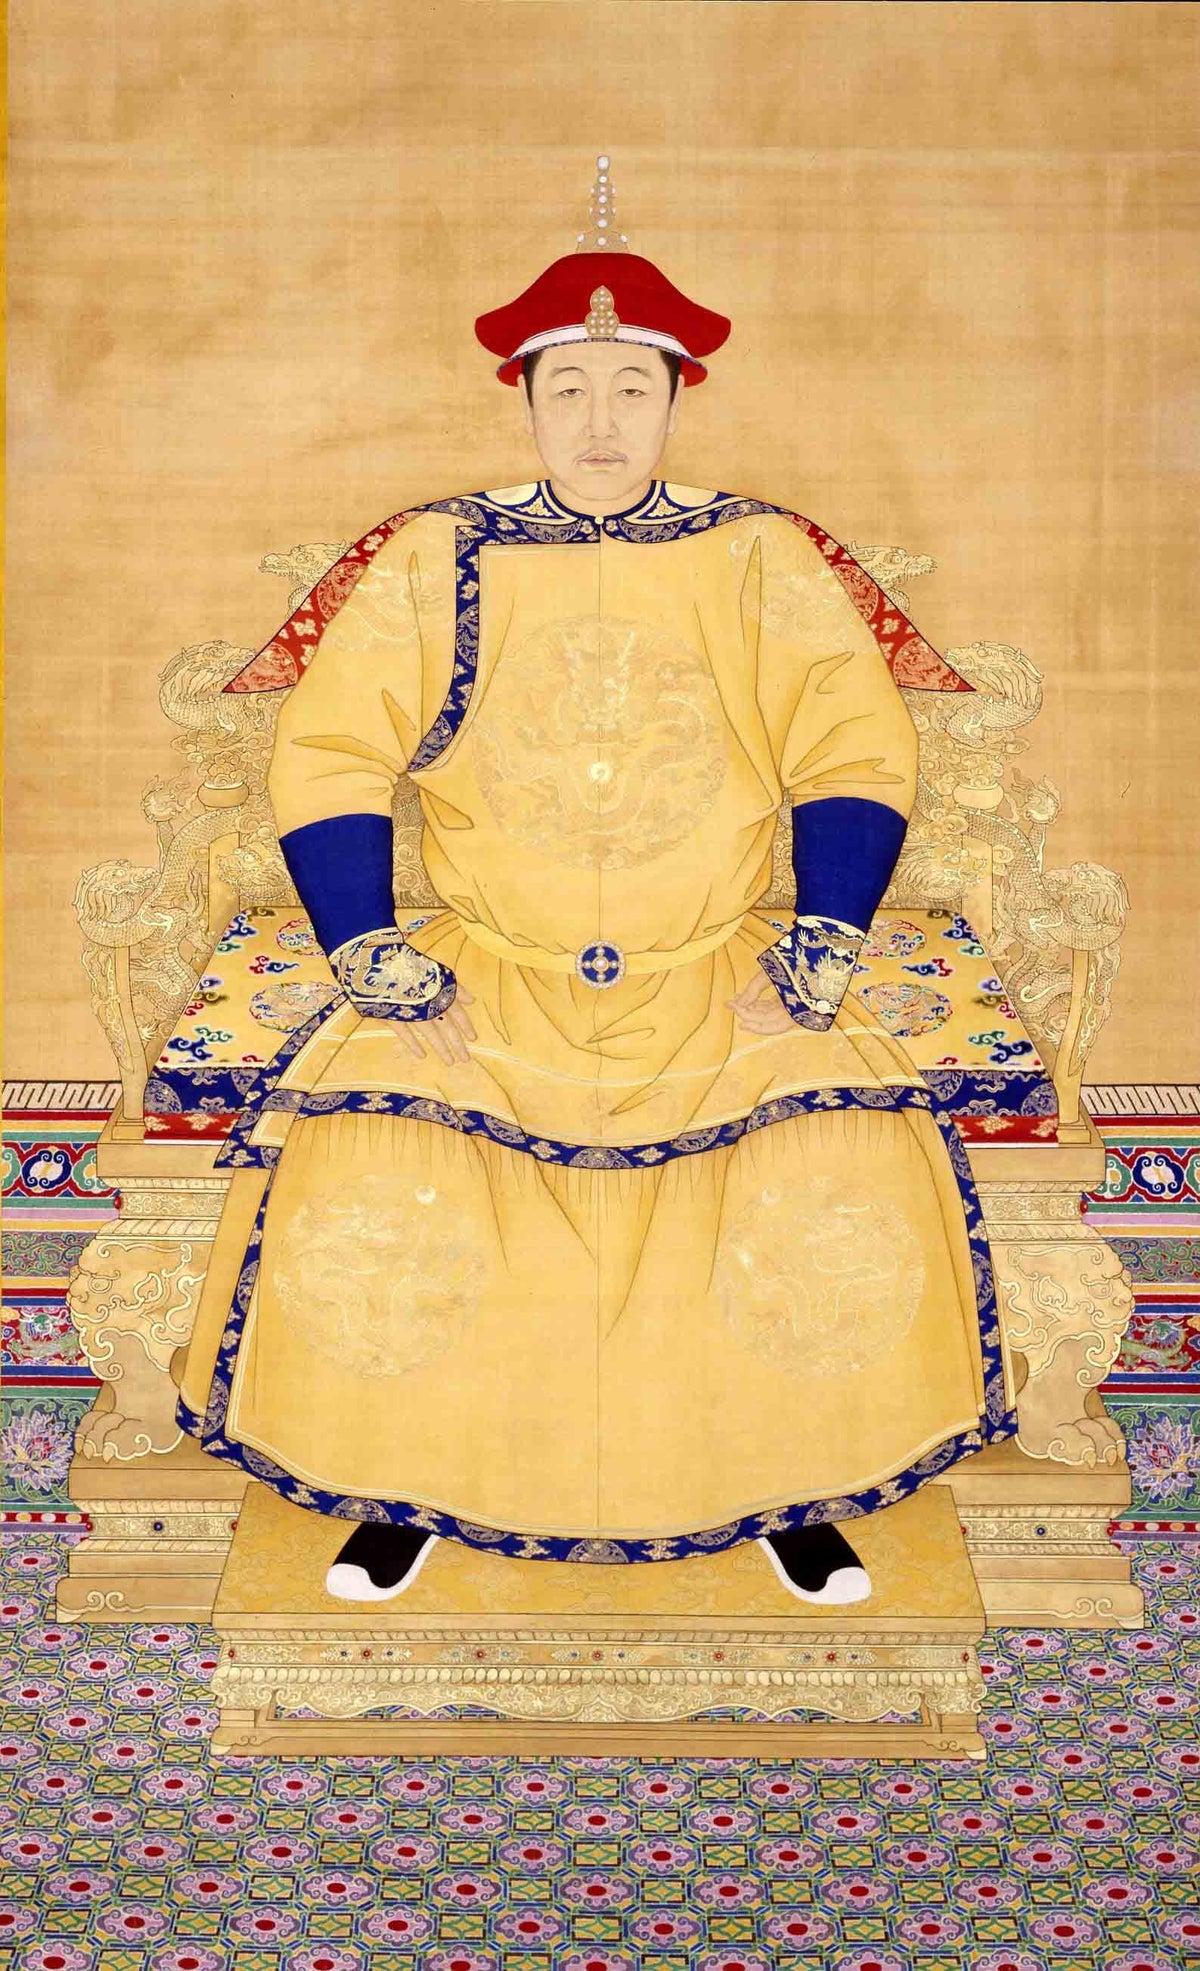 Emperor Shunzhi Home & Garden > Decor > Artwork > Posters, Prints, & Visual Artwork ArtToyourlife